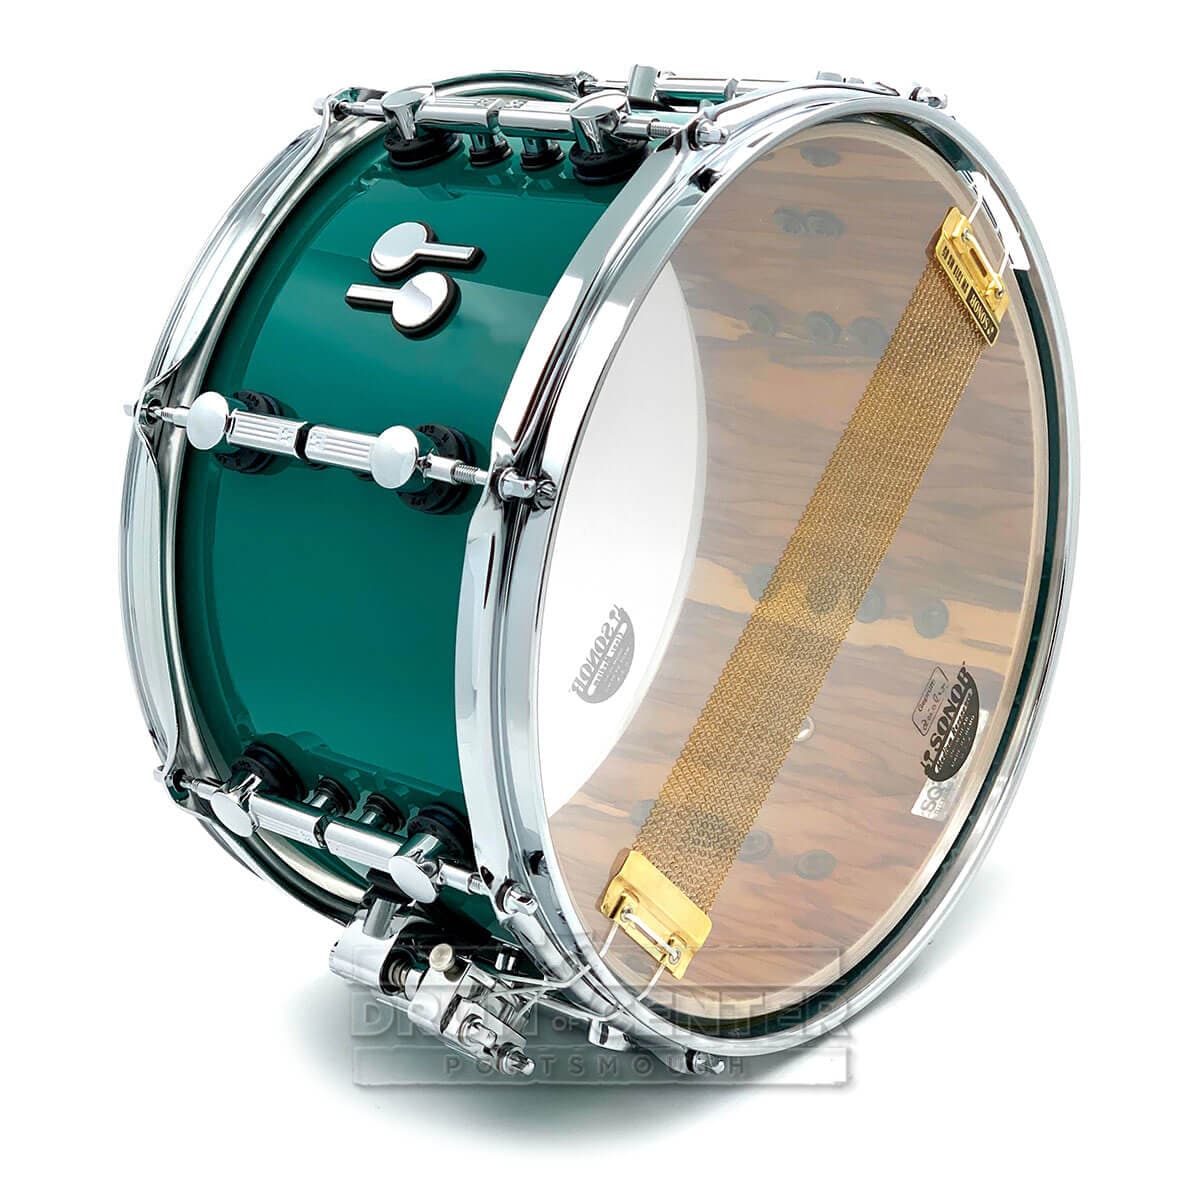 Sonor SQ2 Medium Birch Snare Drum 13x7 Opal Green